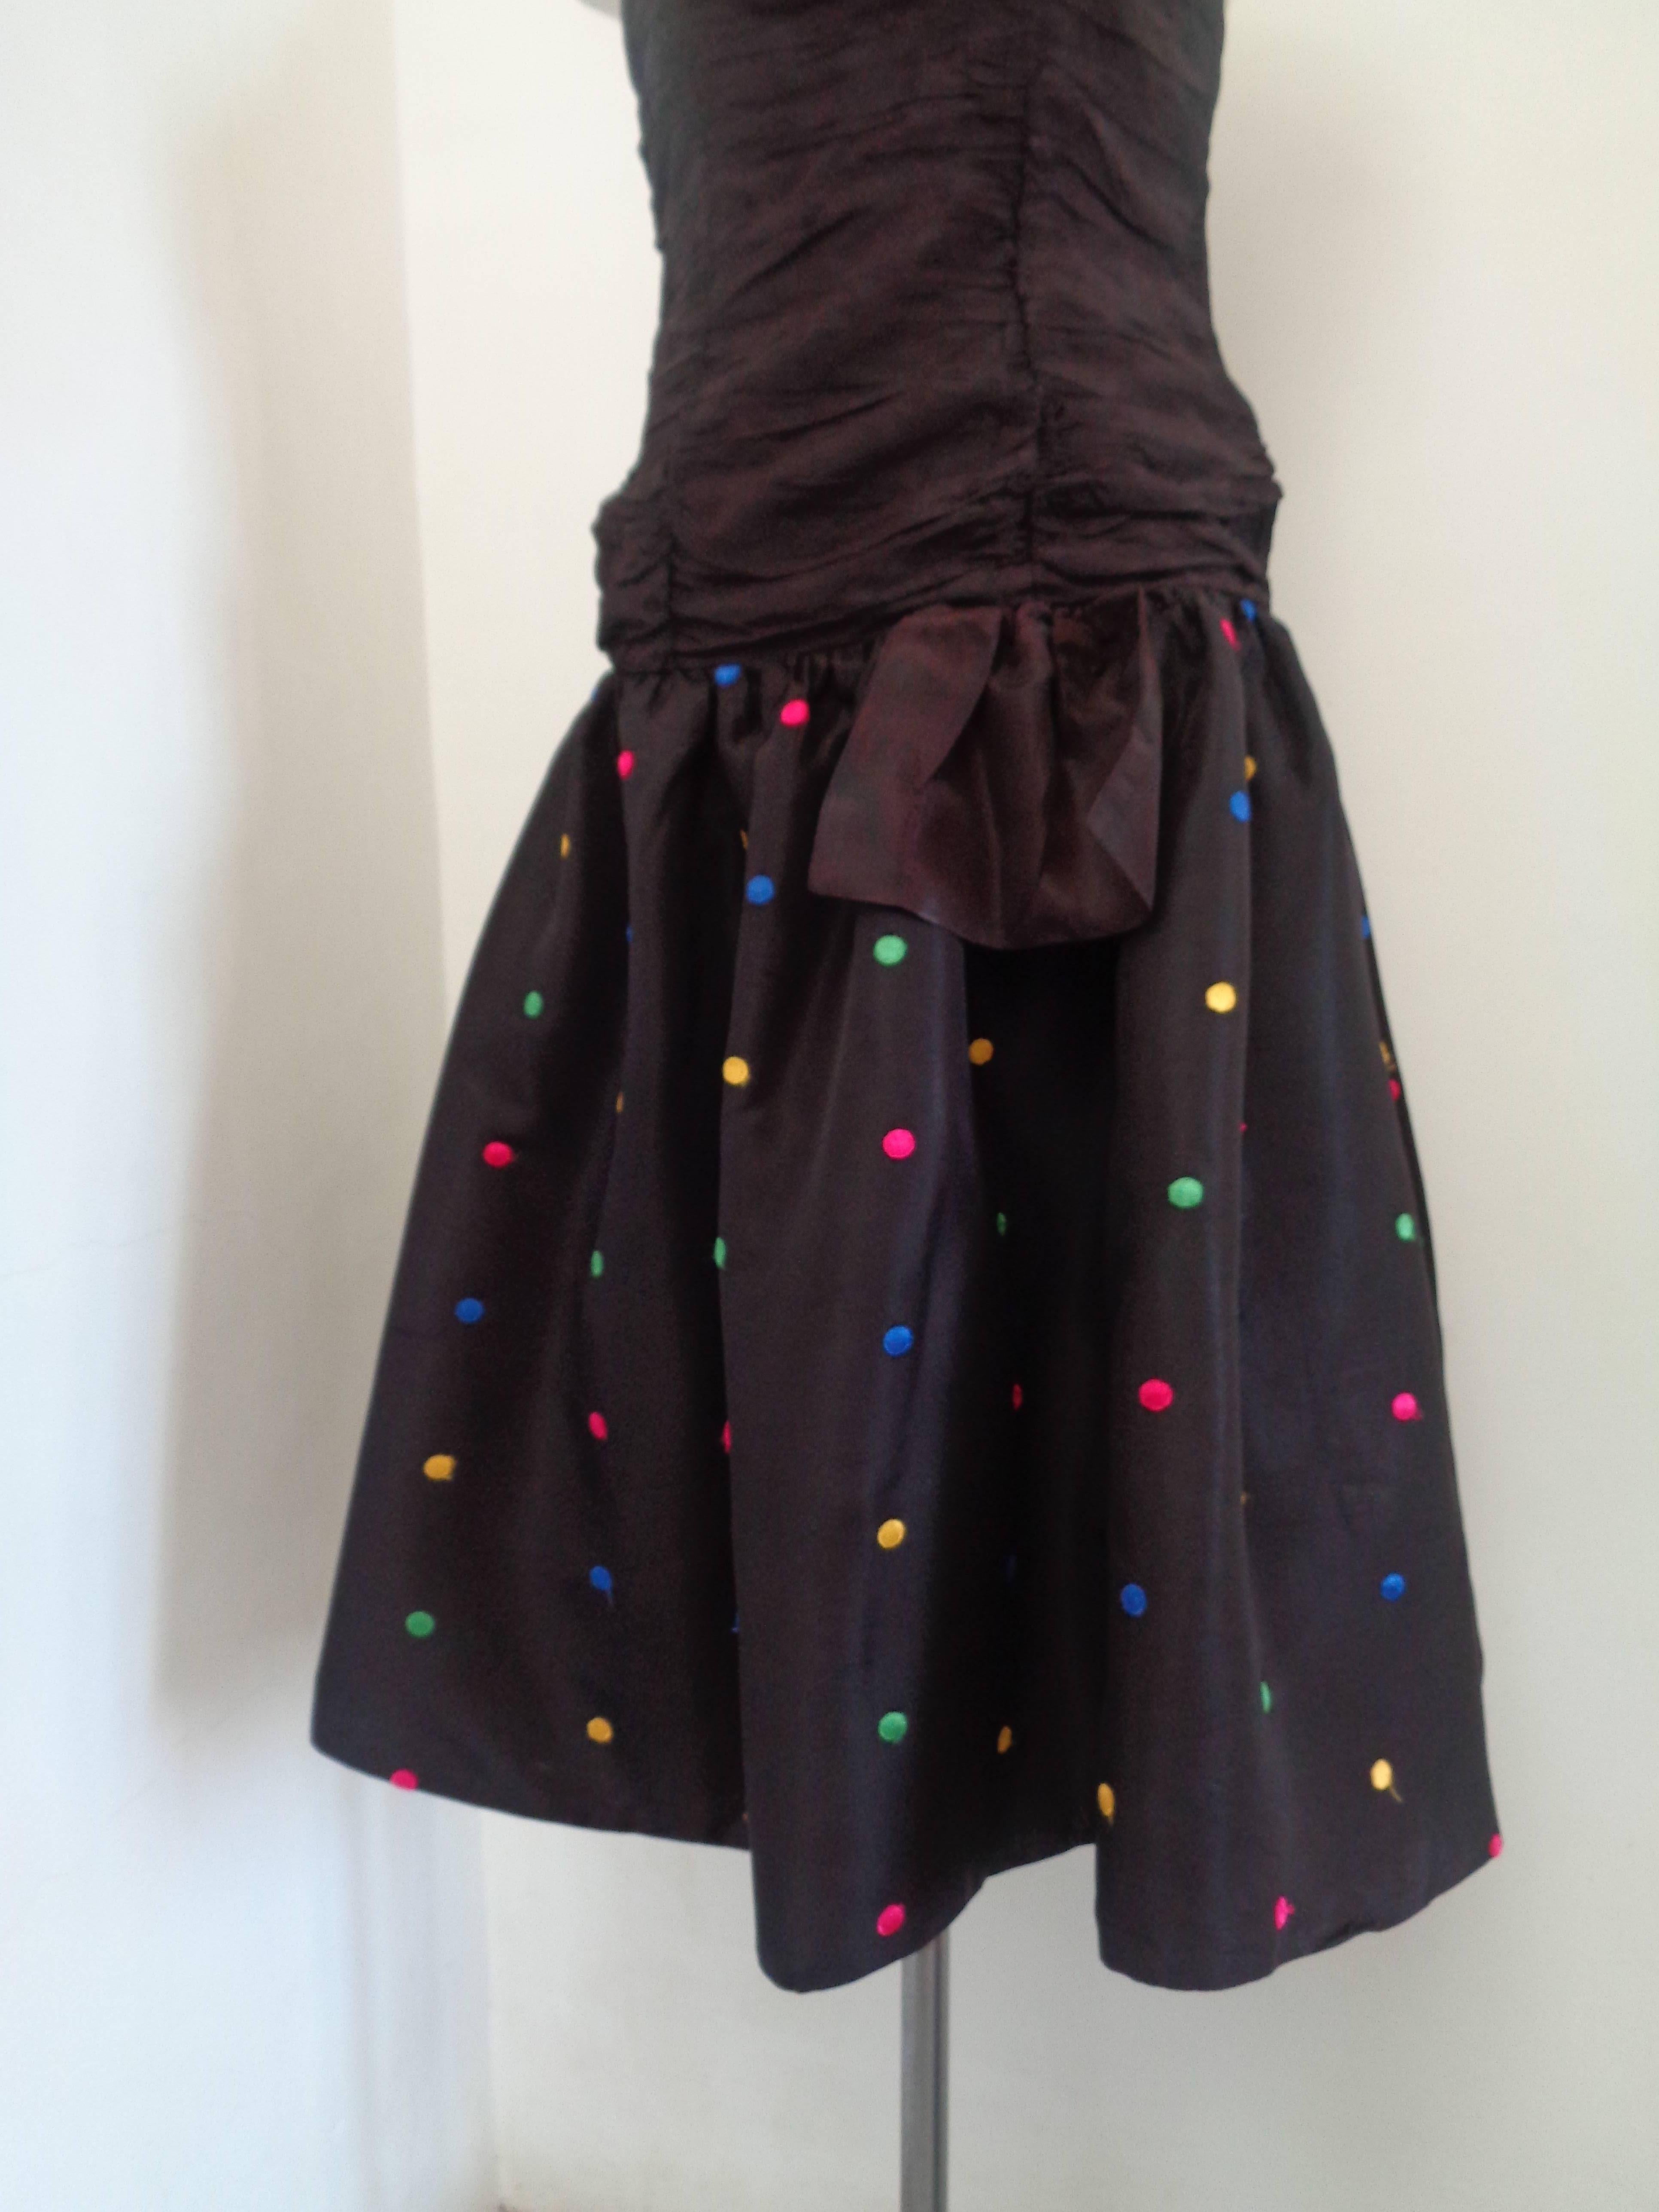 Robe noire Prom Night Blacke embellie Pois on Skirt des années 1980

Totalement fabriqué en Italie 

Composition : Viscose polyester polyamide

Taille 36